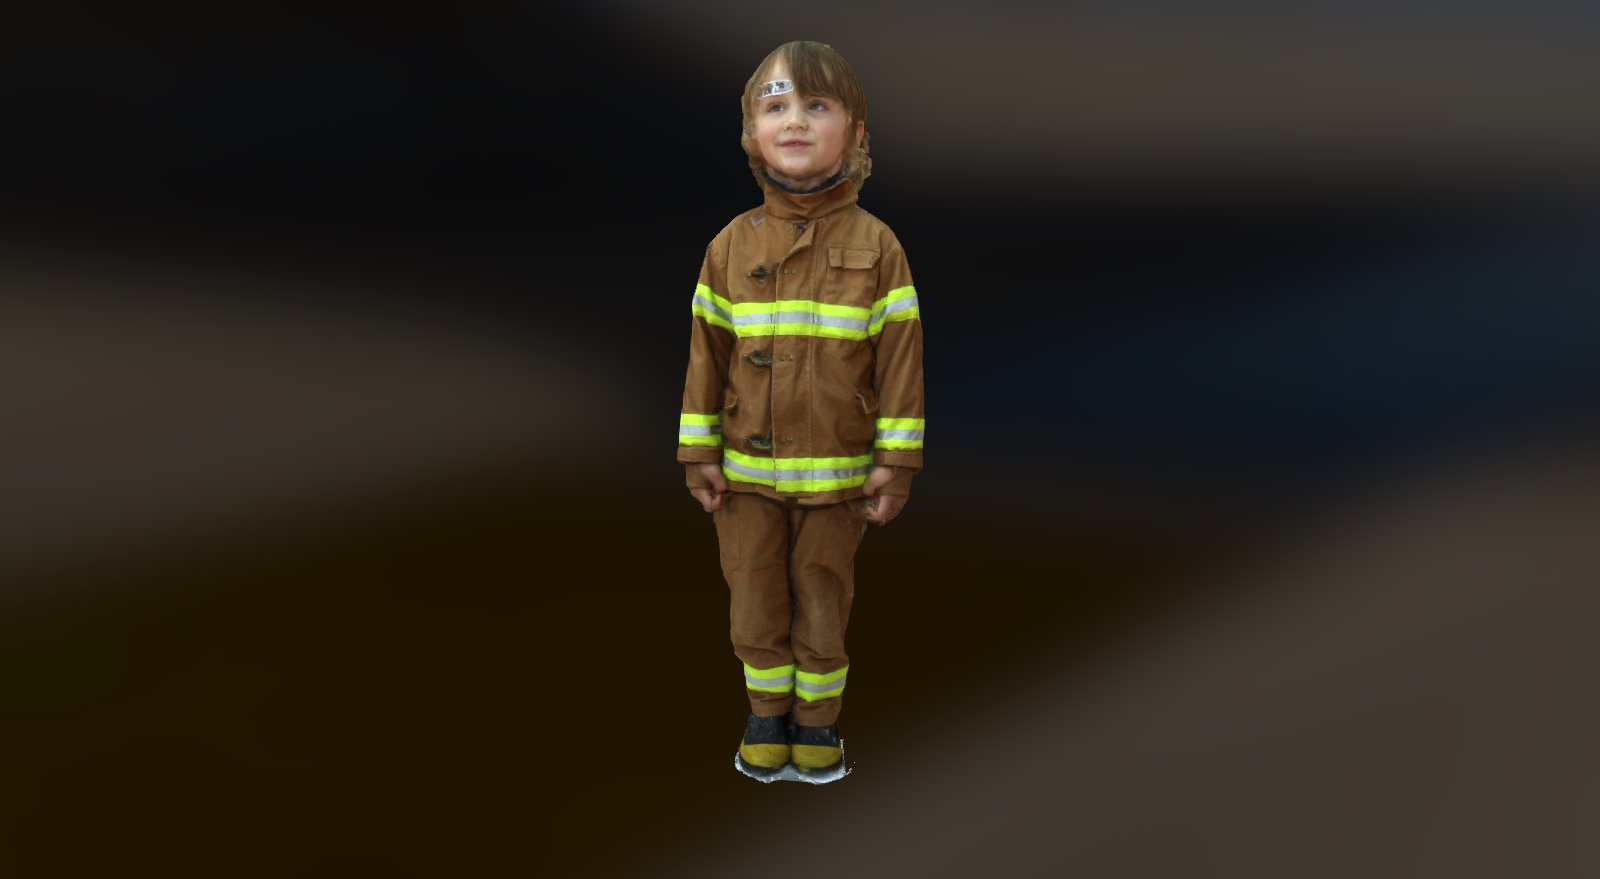 Fireman 1